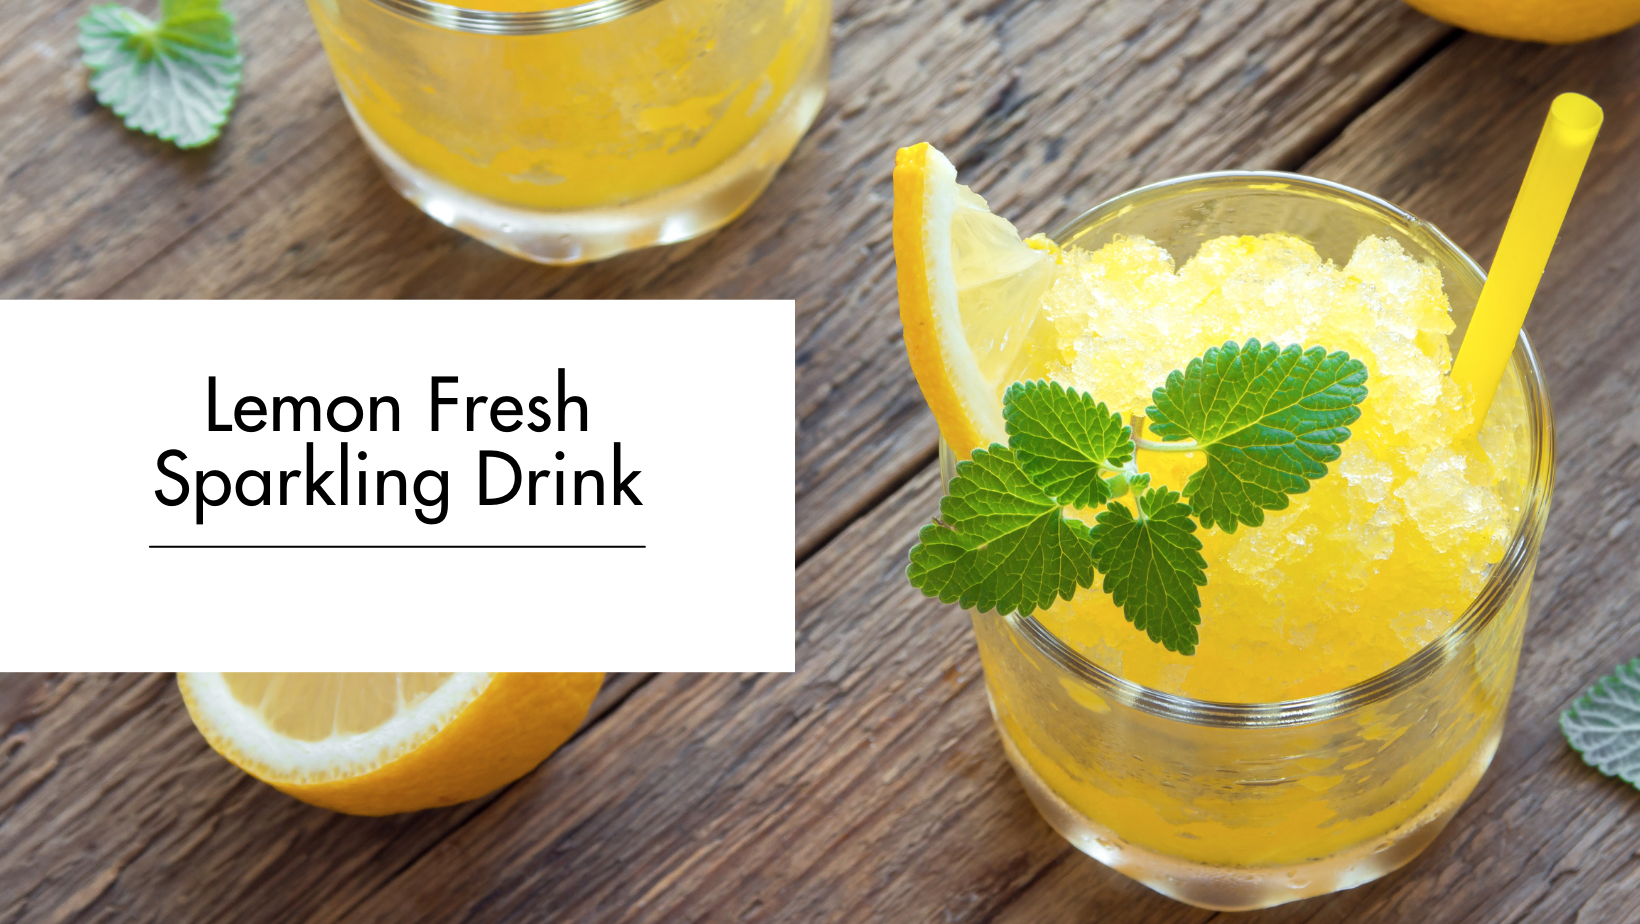 Lemon Fresh Sparkling drink